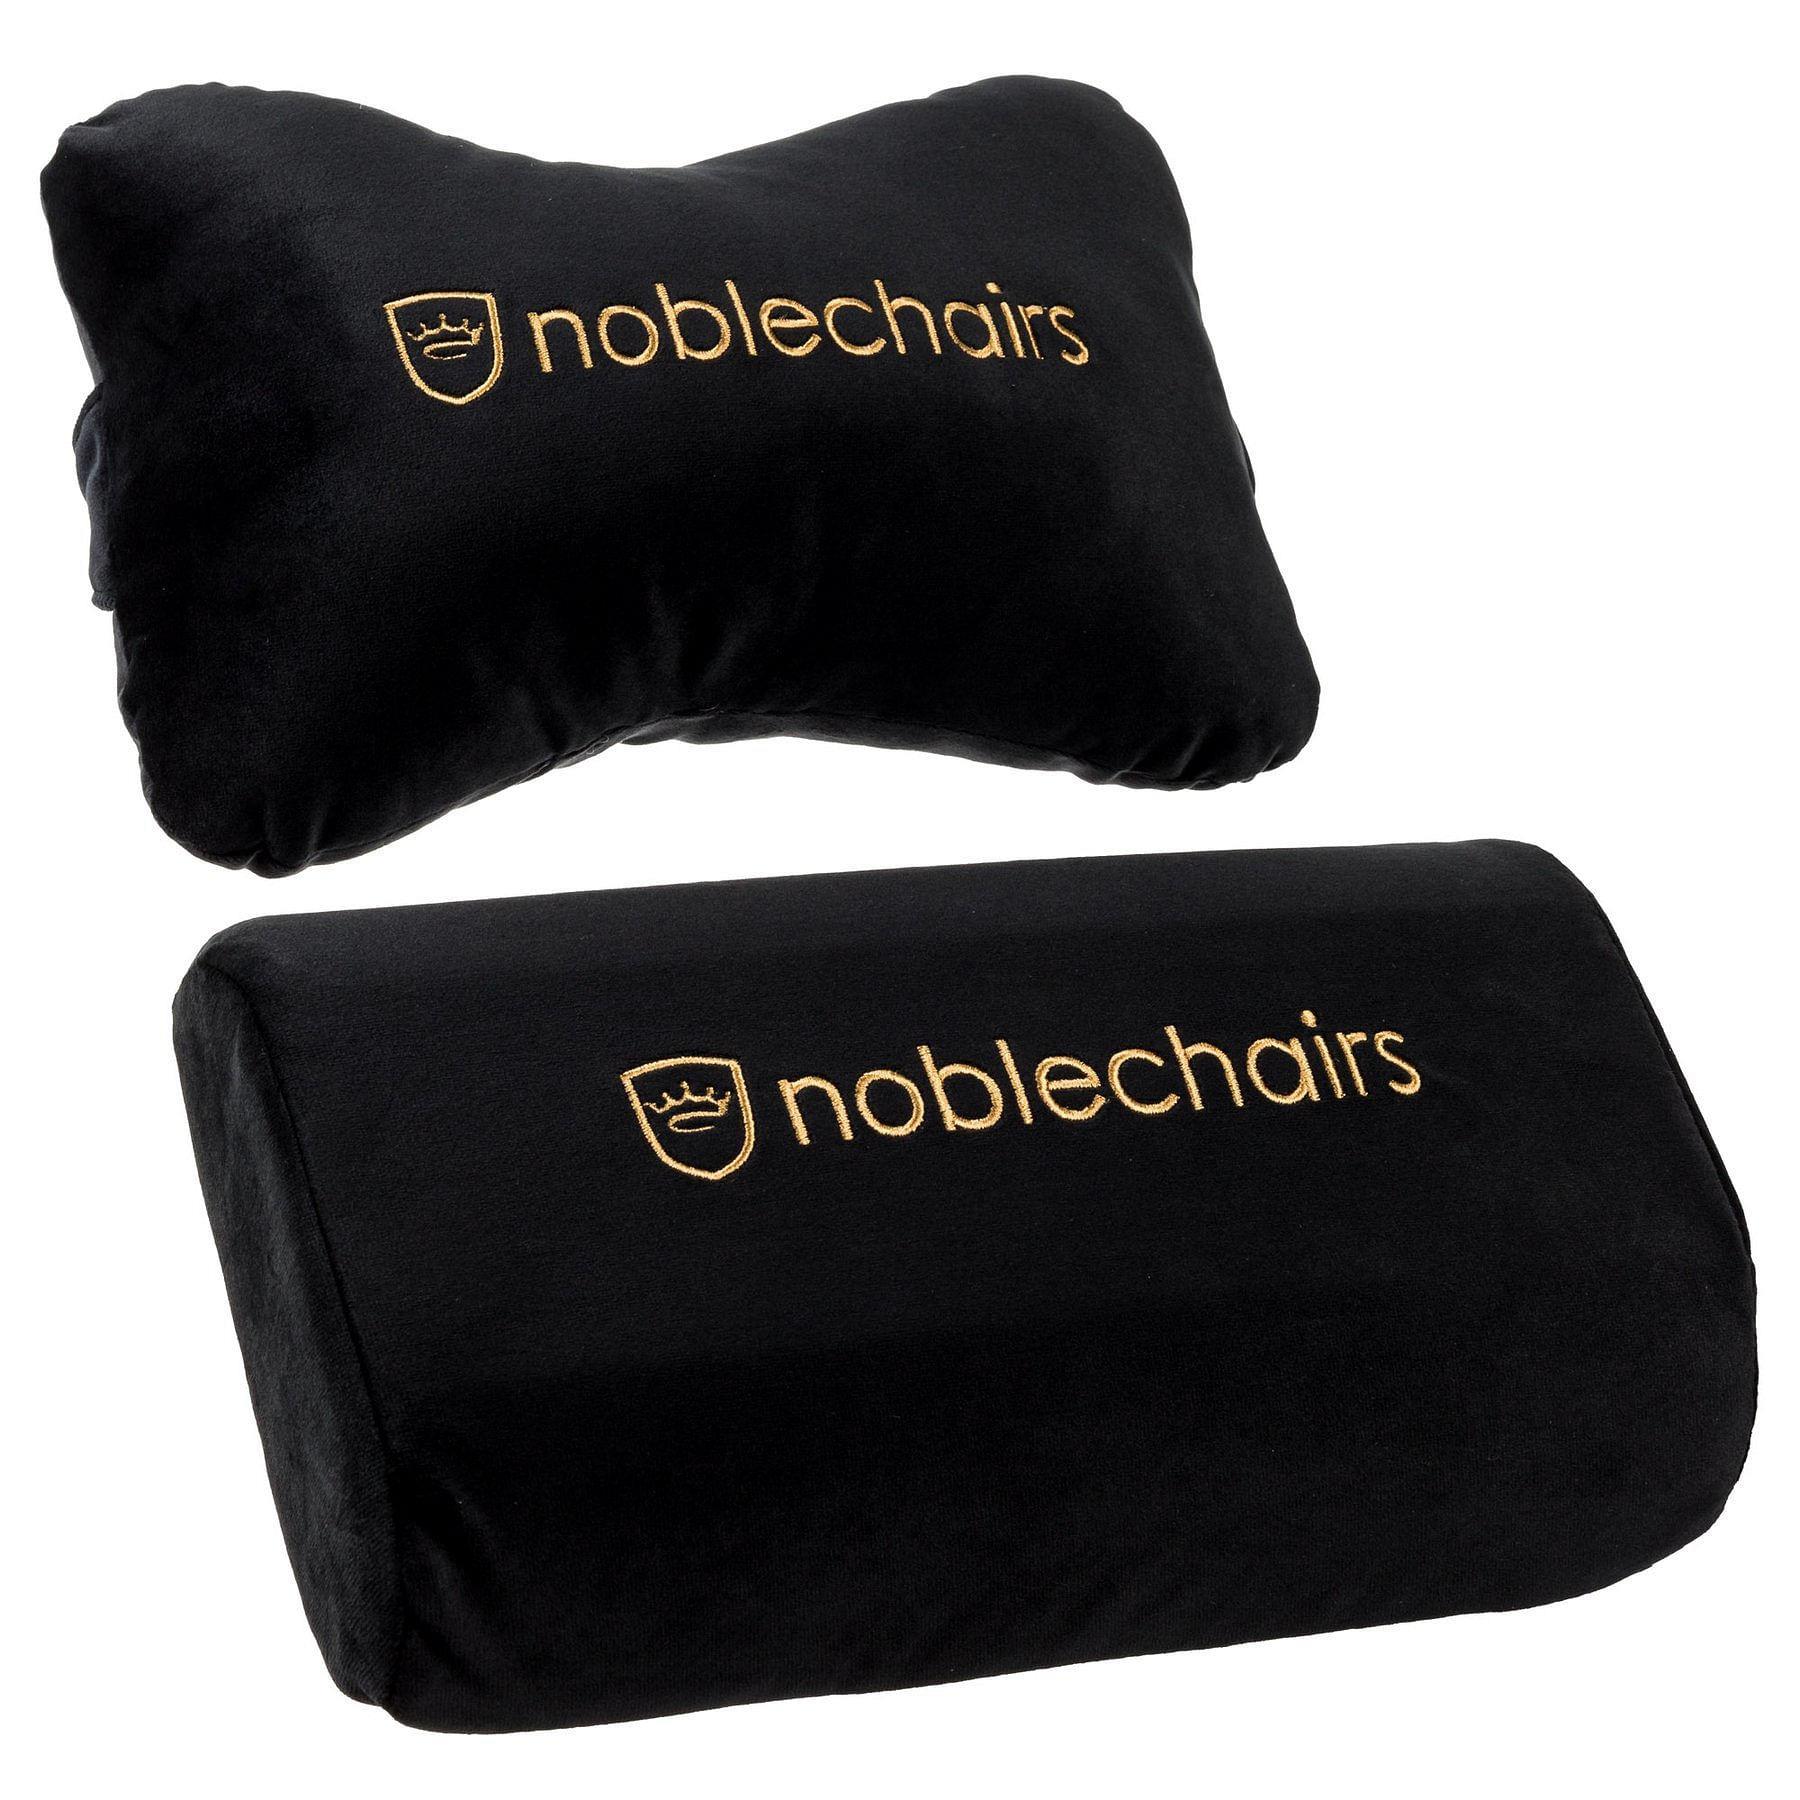 Noblechairs Pillow-Set Epic/Icon/Hero - Black/Gold [NBL-SP-PST-004]